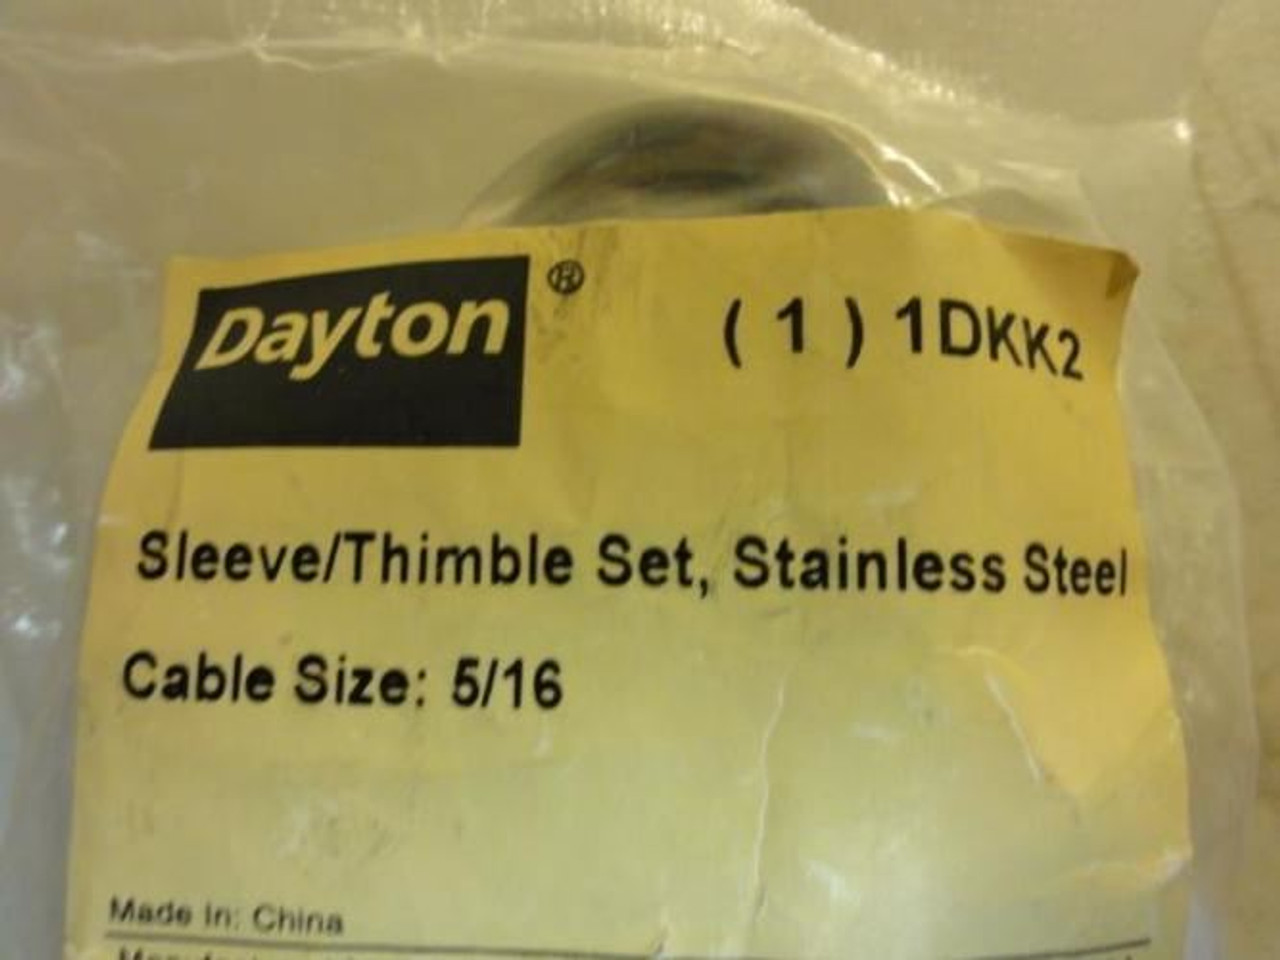 Dayton 1DKK2; Sleeve and Thimble Kit; Stainless Steel